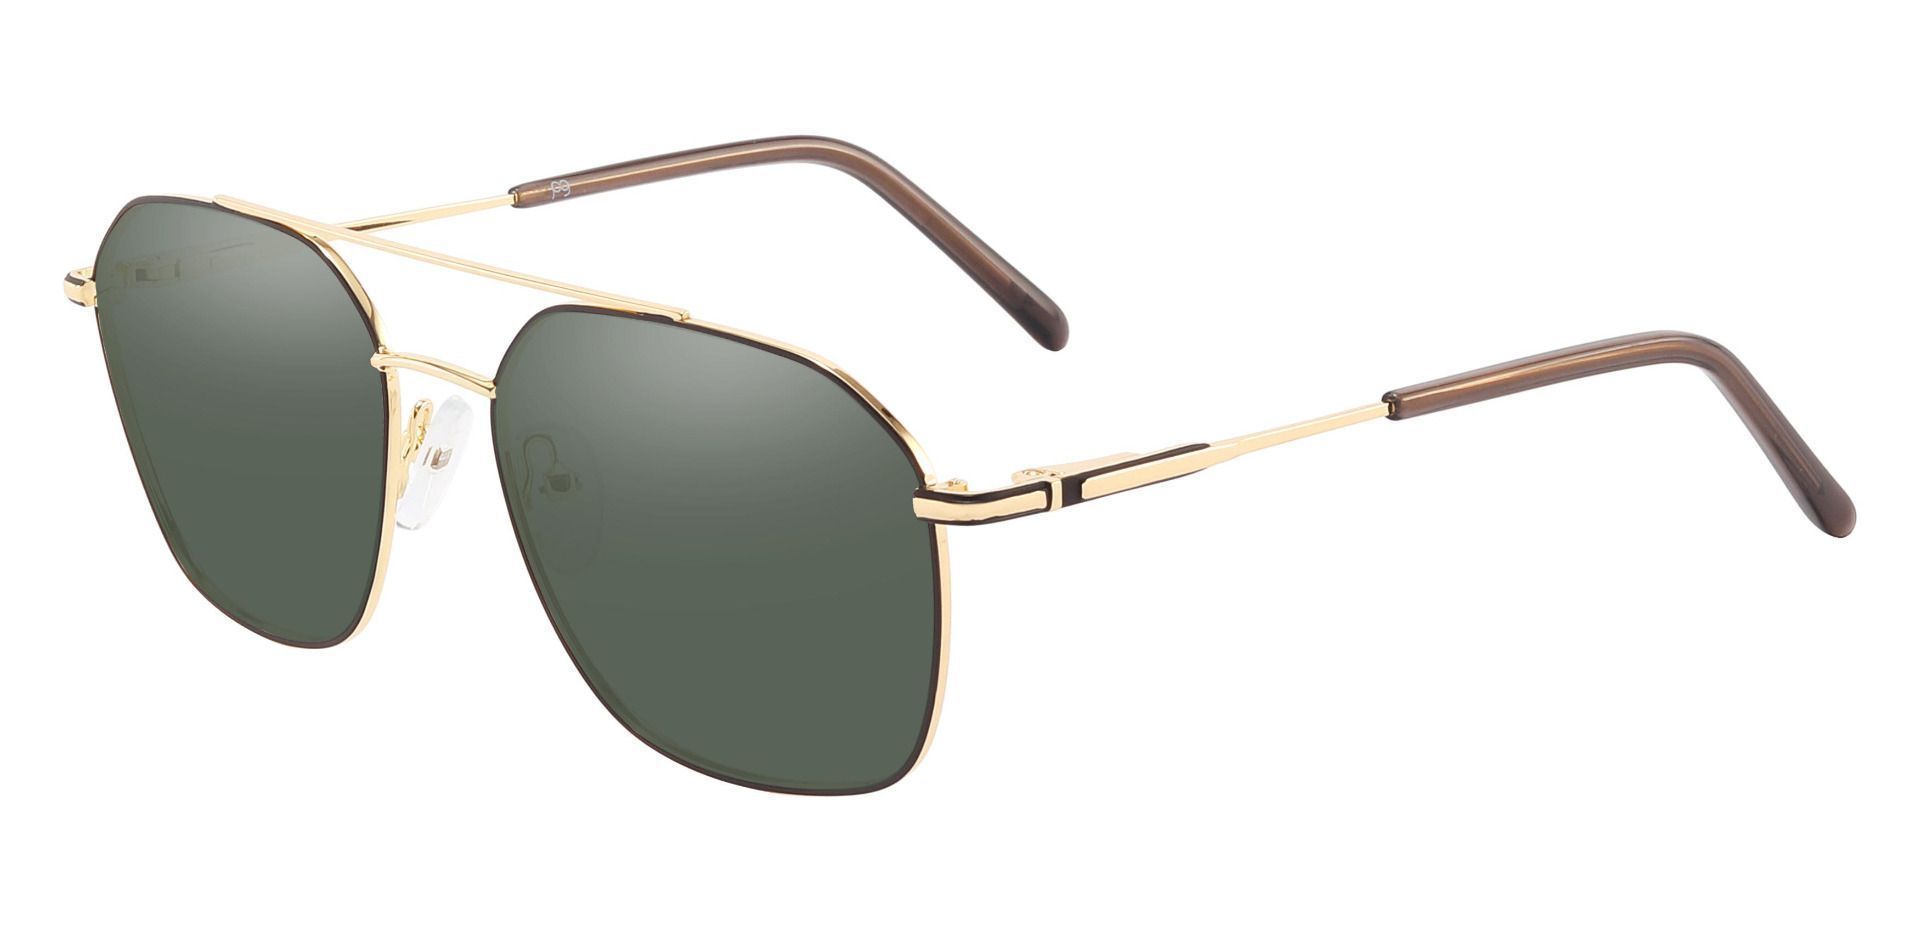 Harvey Aviator Non-Rx Sunglasses - Gold Frame With Green Lenses